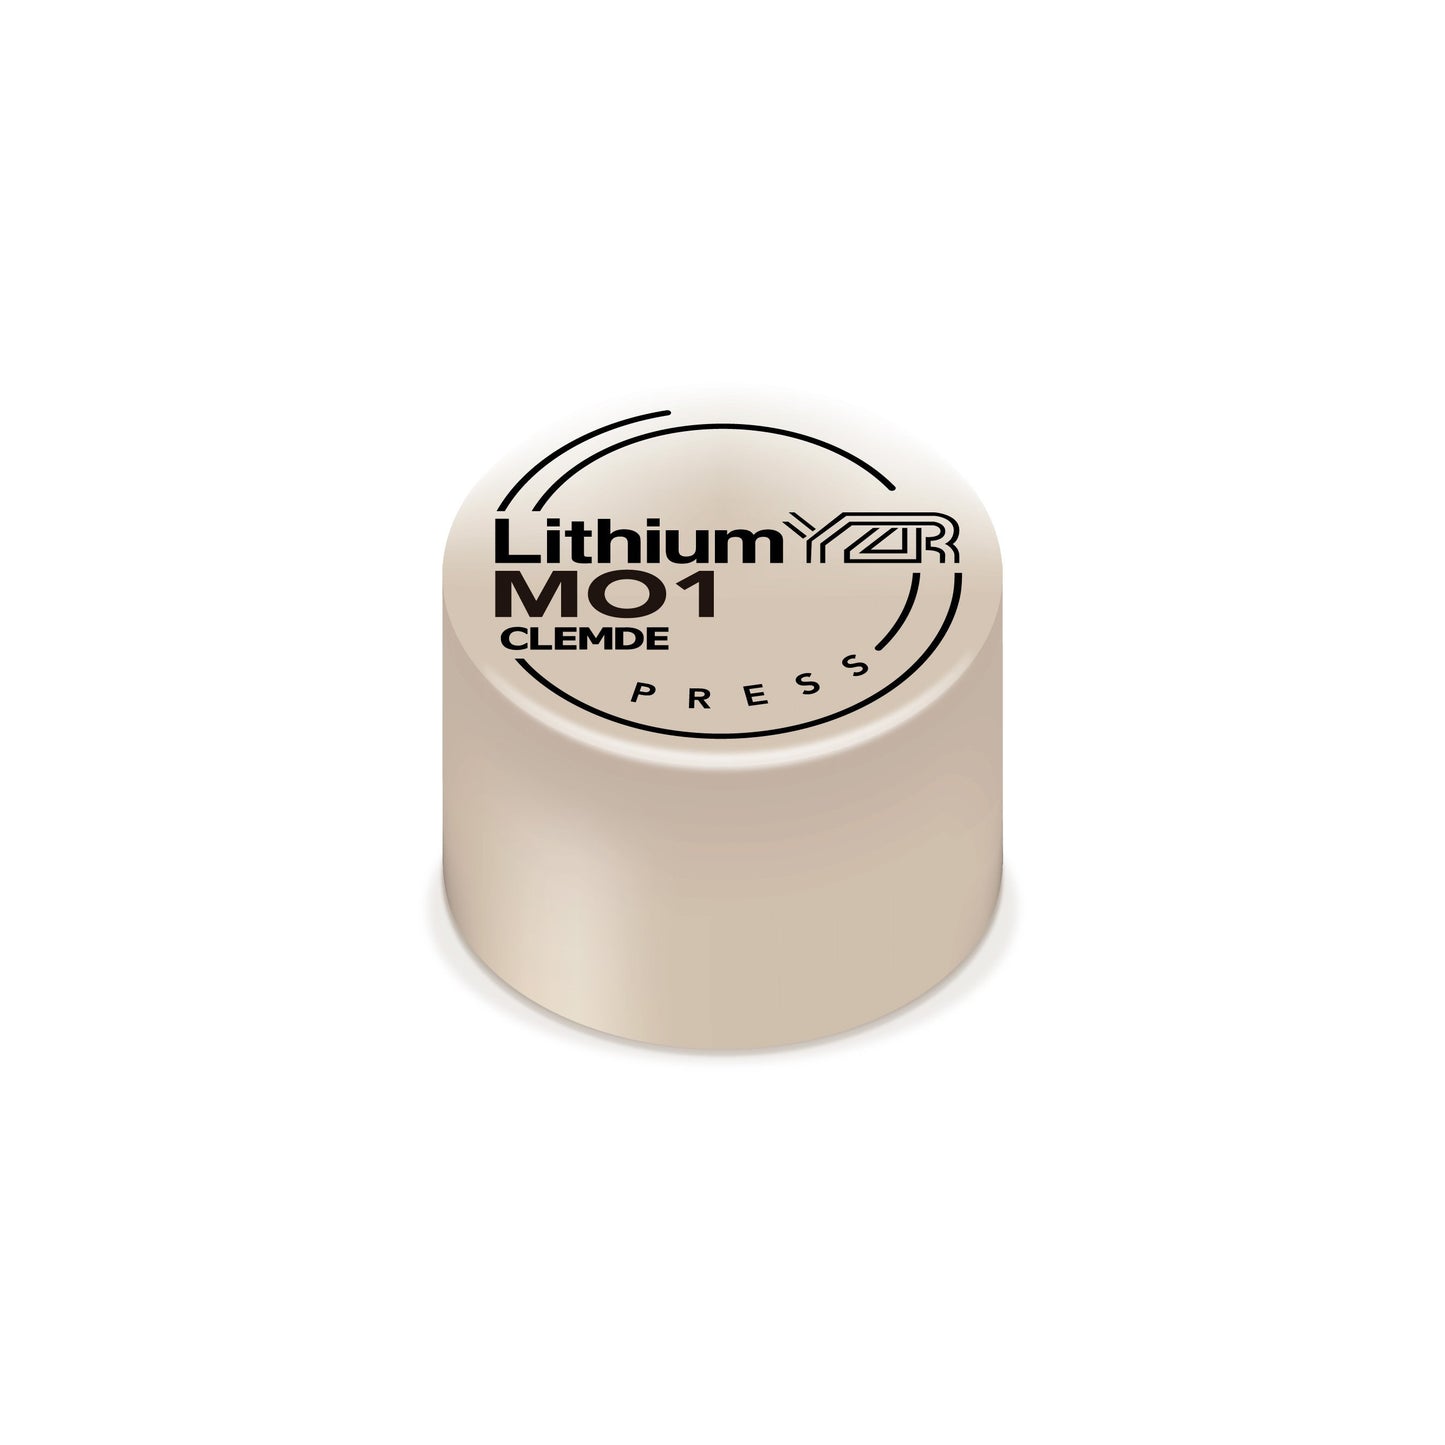 Lithium YZR Disilicato de Litio Prensado Dental Lithium YZR 